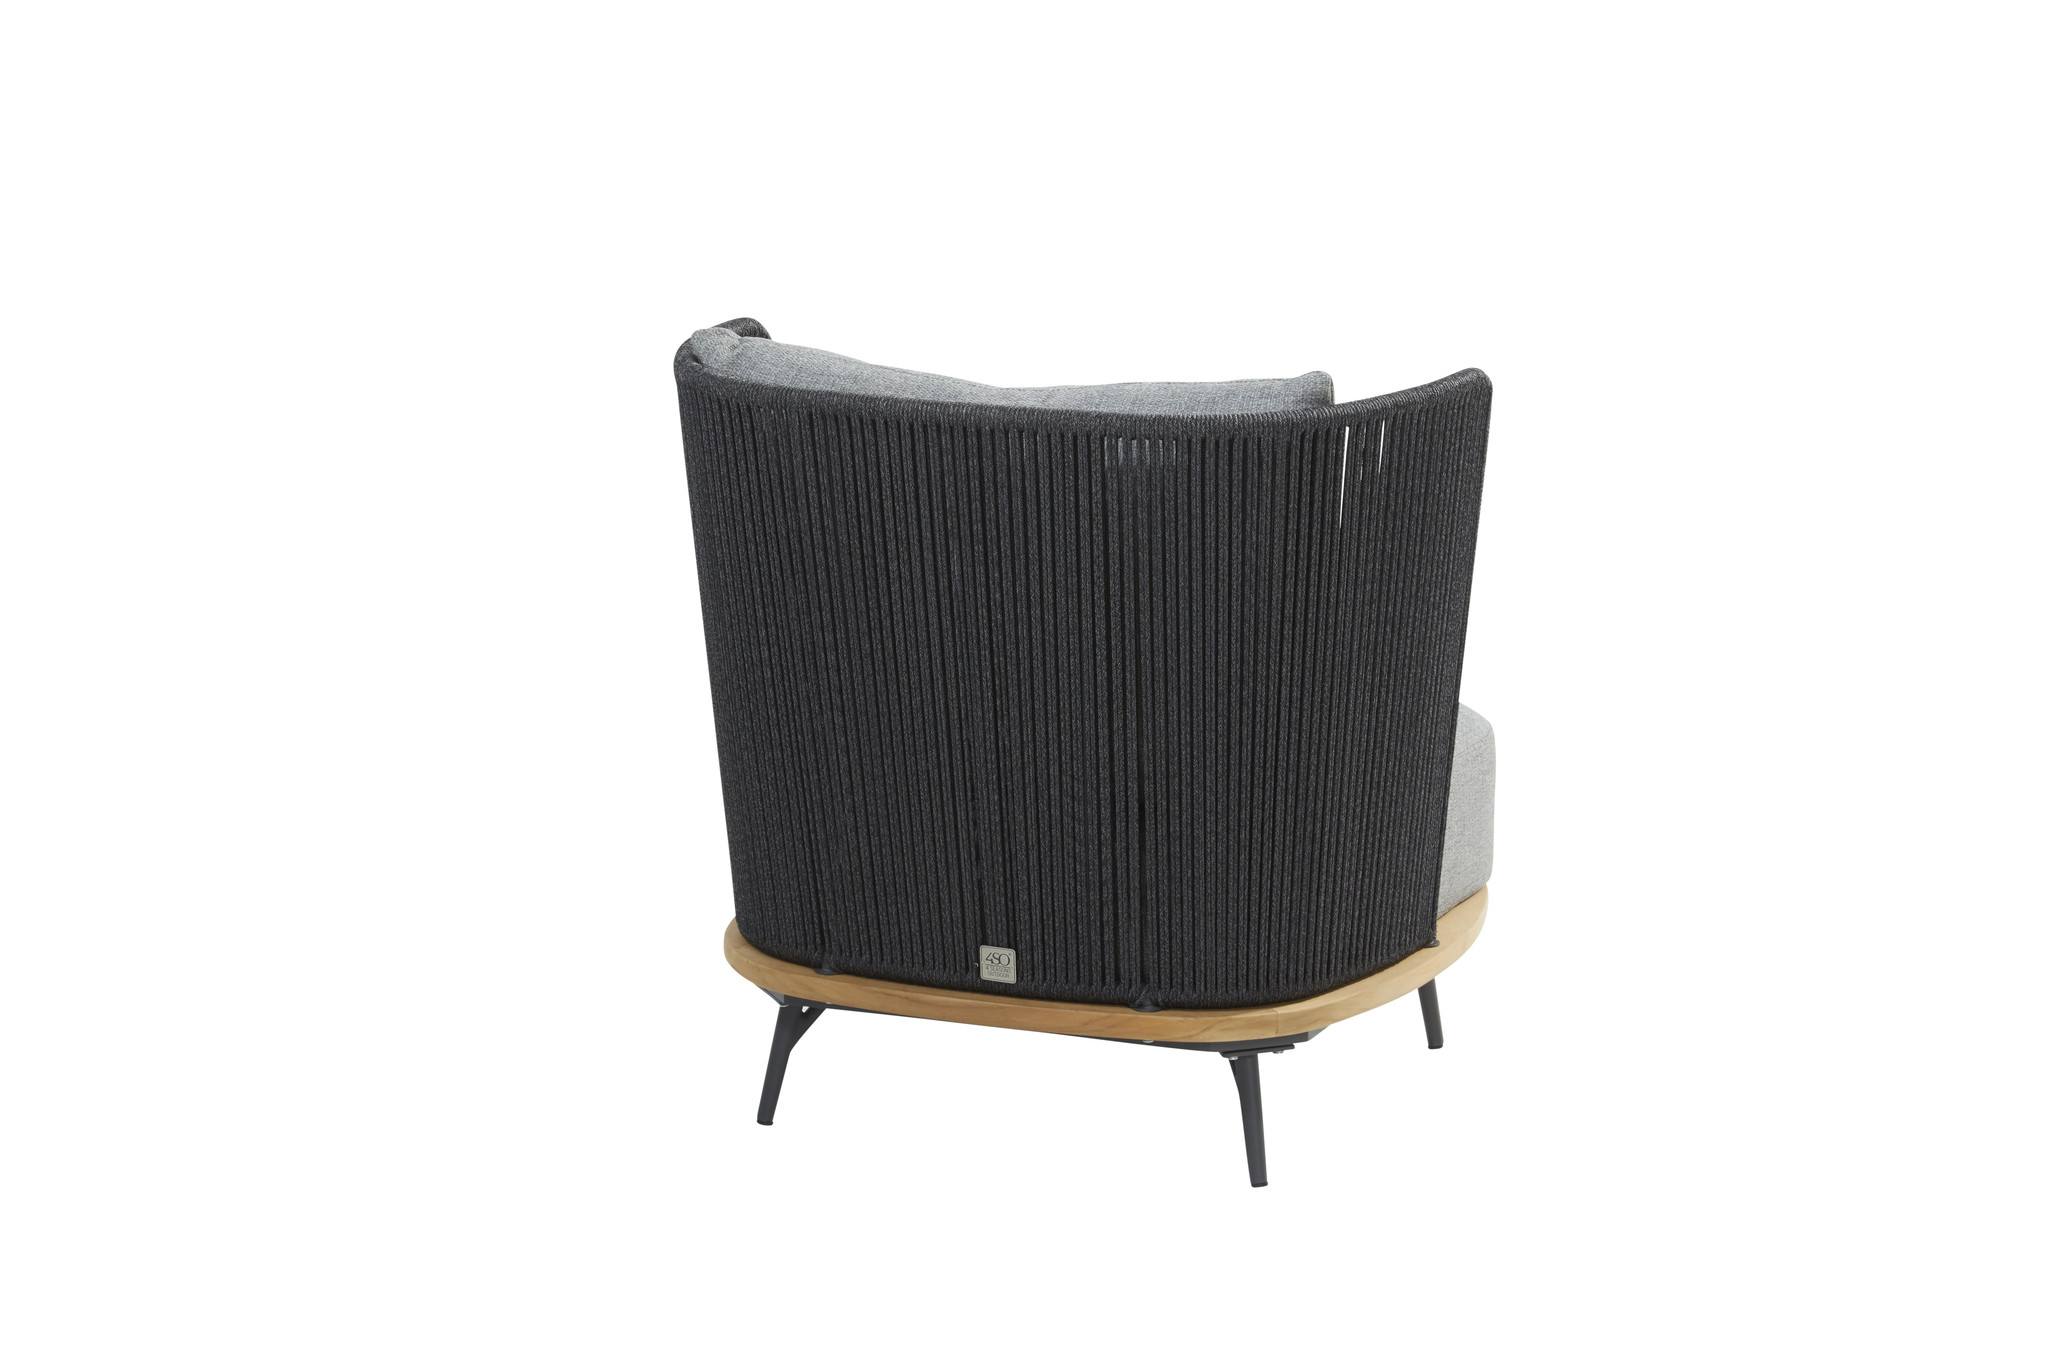 4 Seasons Outdoor Positano living chair - Springbed | mattress | outdoor  furniture | gascylinders